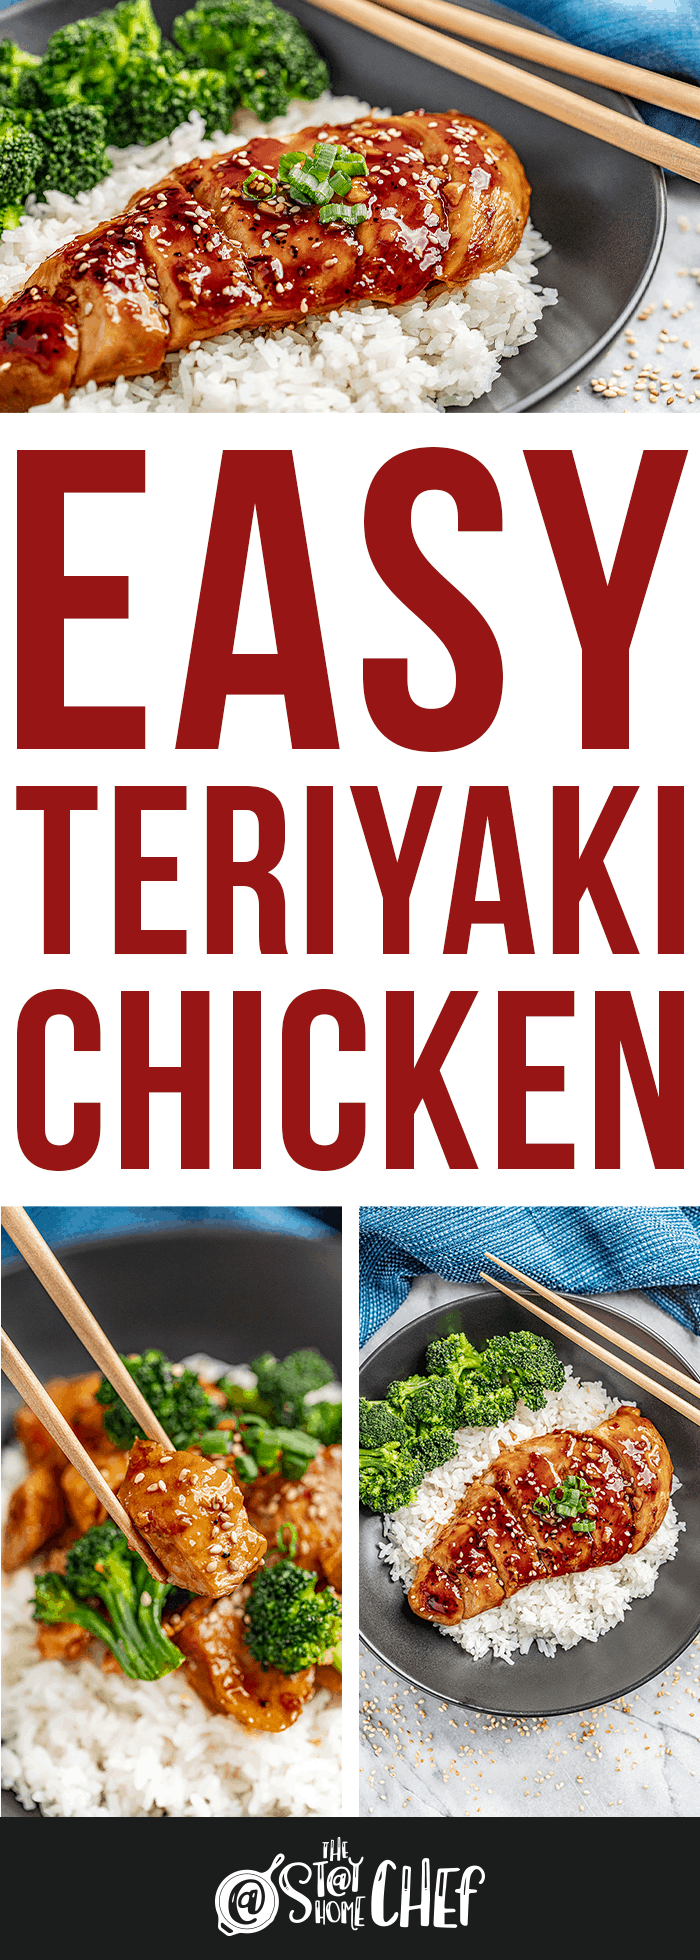 Easy Chicken Teriyaki